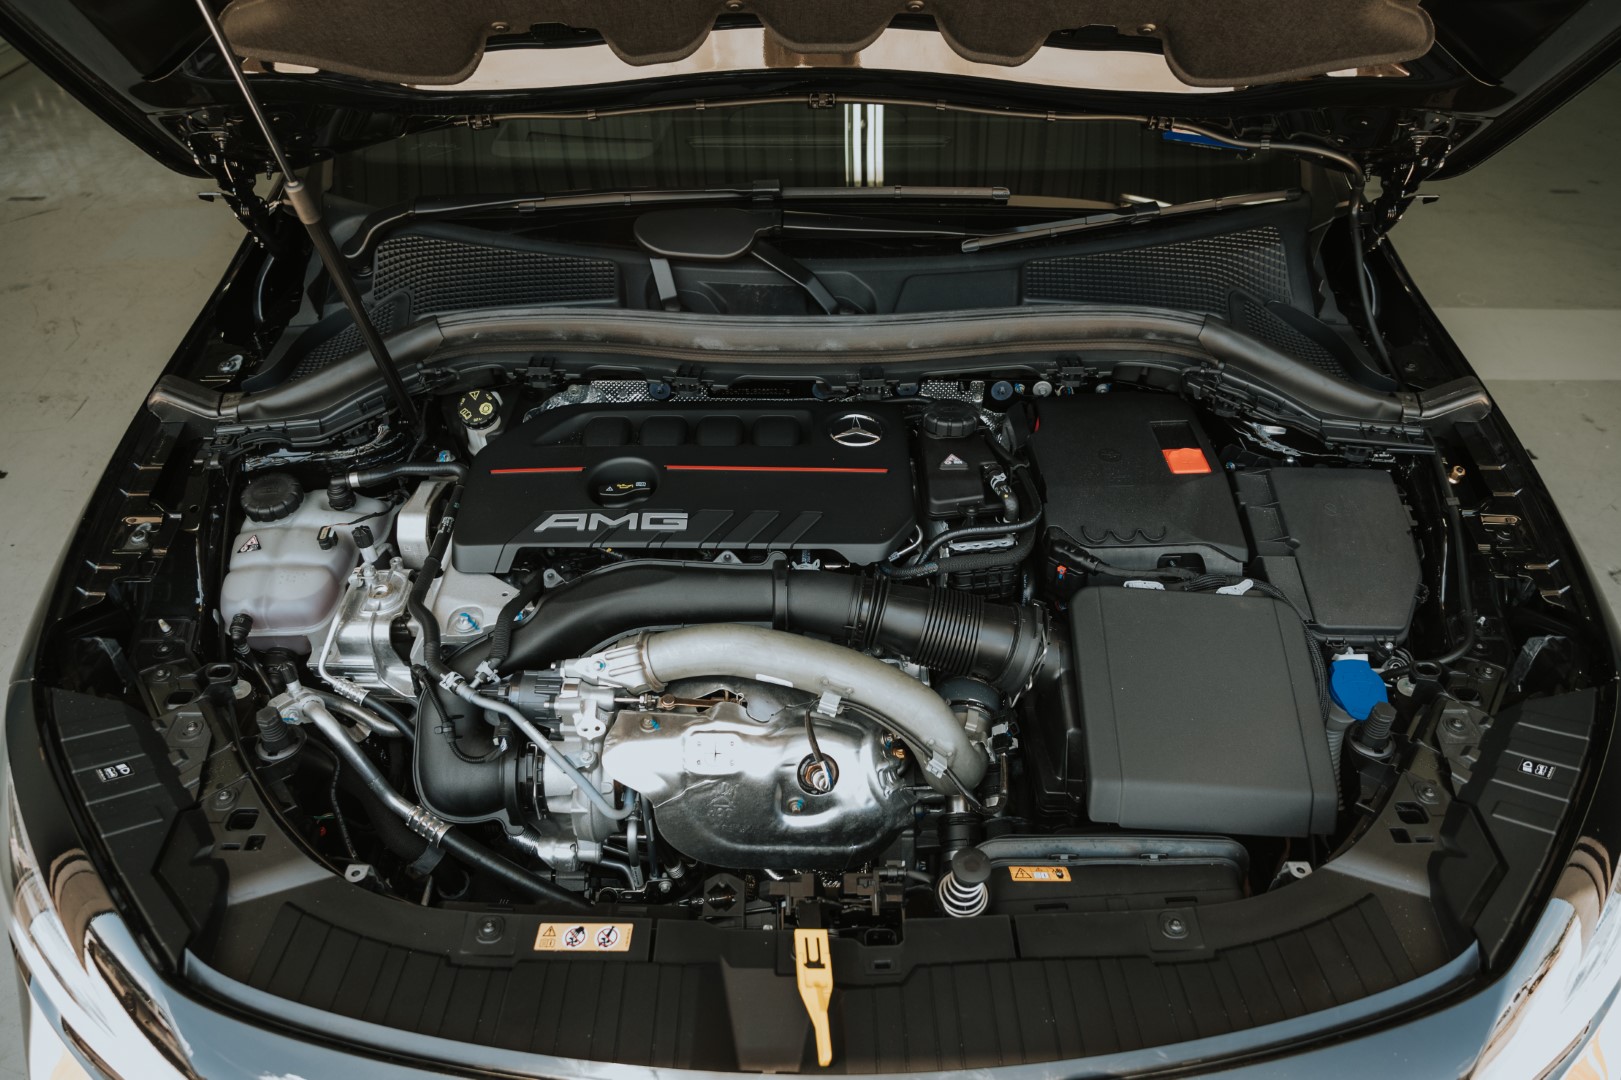 Mercedes-AMG GLA 35 CKD engine